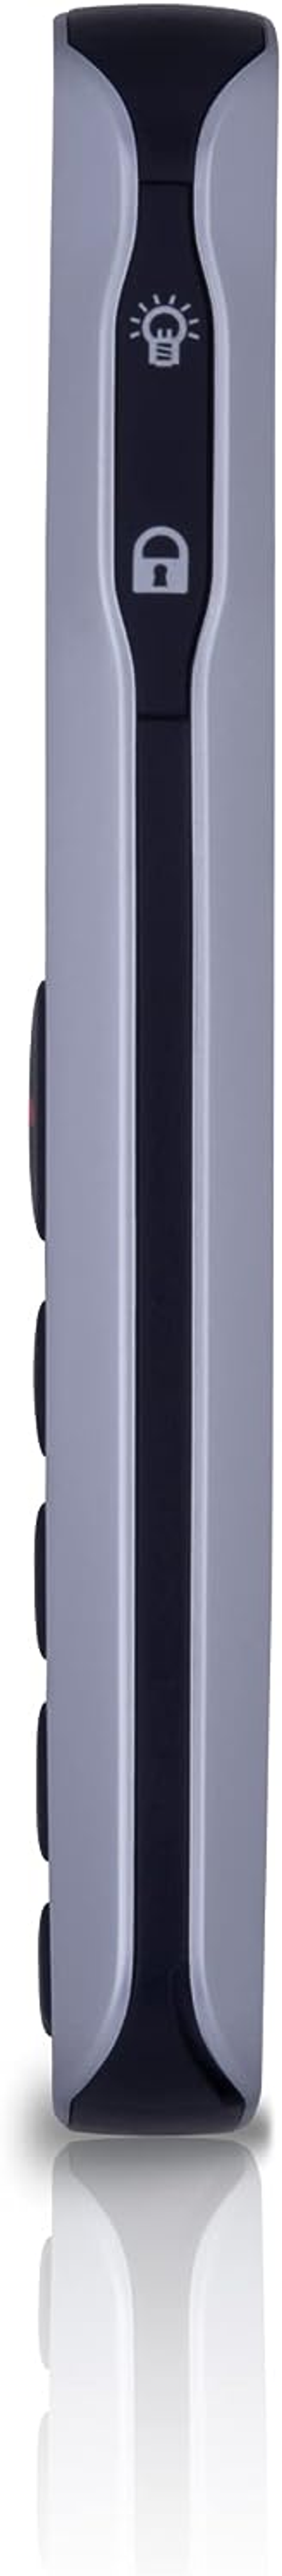 BEAFON SL250 SILBER Handy, -SCHWARZ Silber